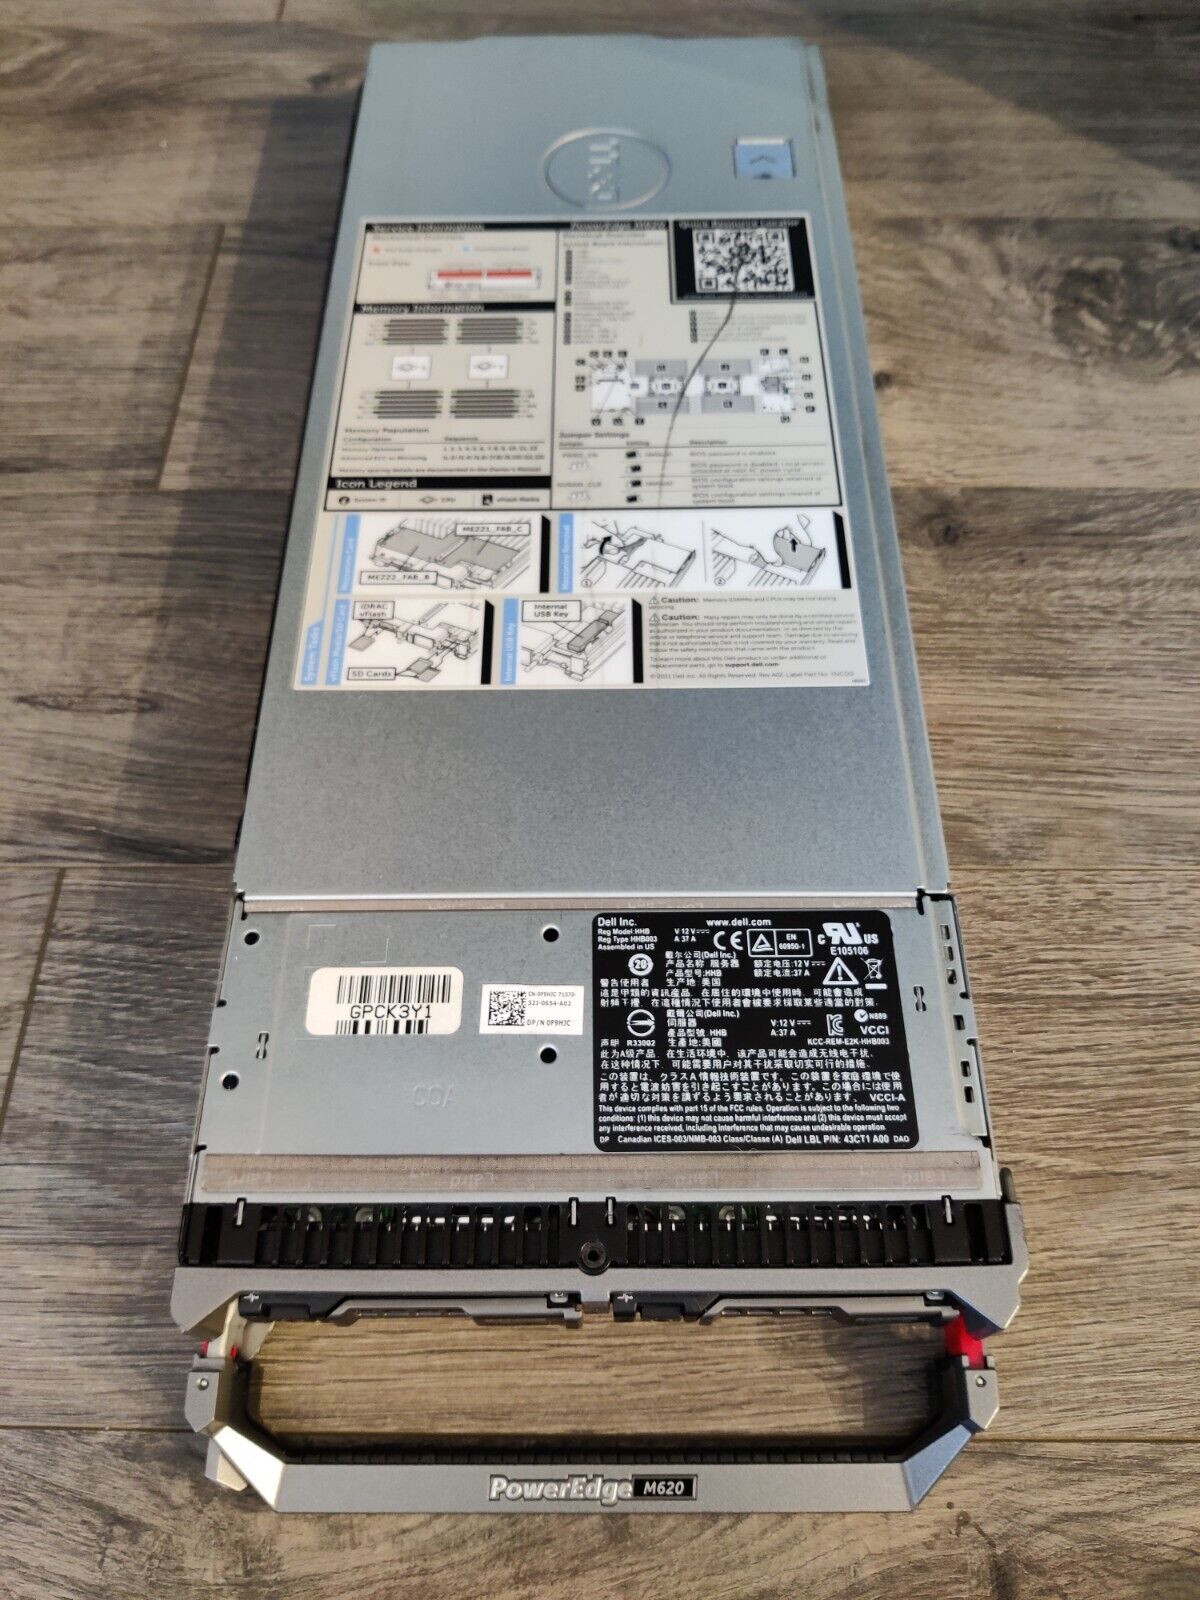 Dell PowerEdge M620 Blade Server - E5-2670 2.6GHz, 320GB RAM, 146GB SAS HD